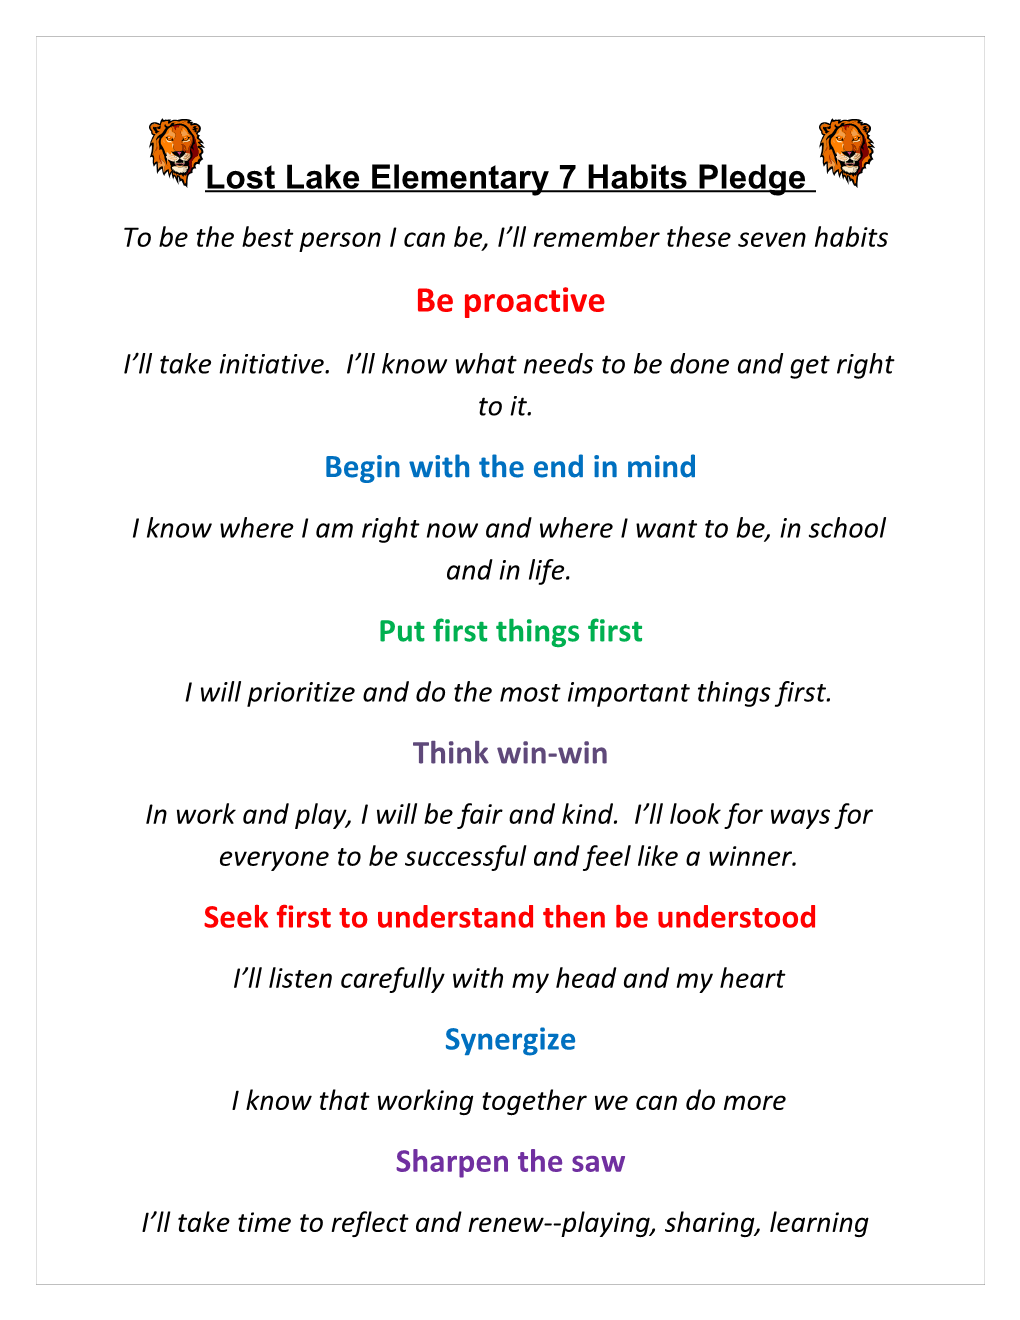 Lost Lake Elementary 7 Habits Pledge